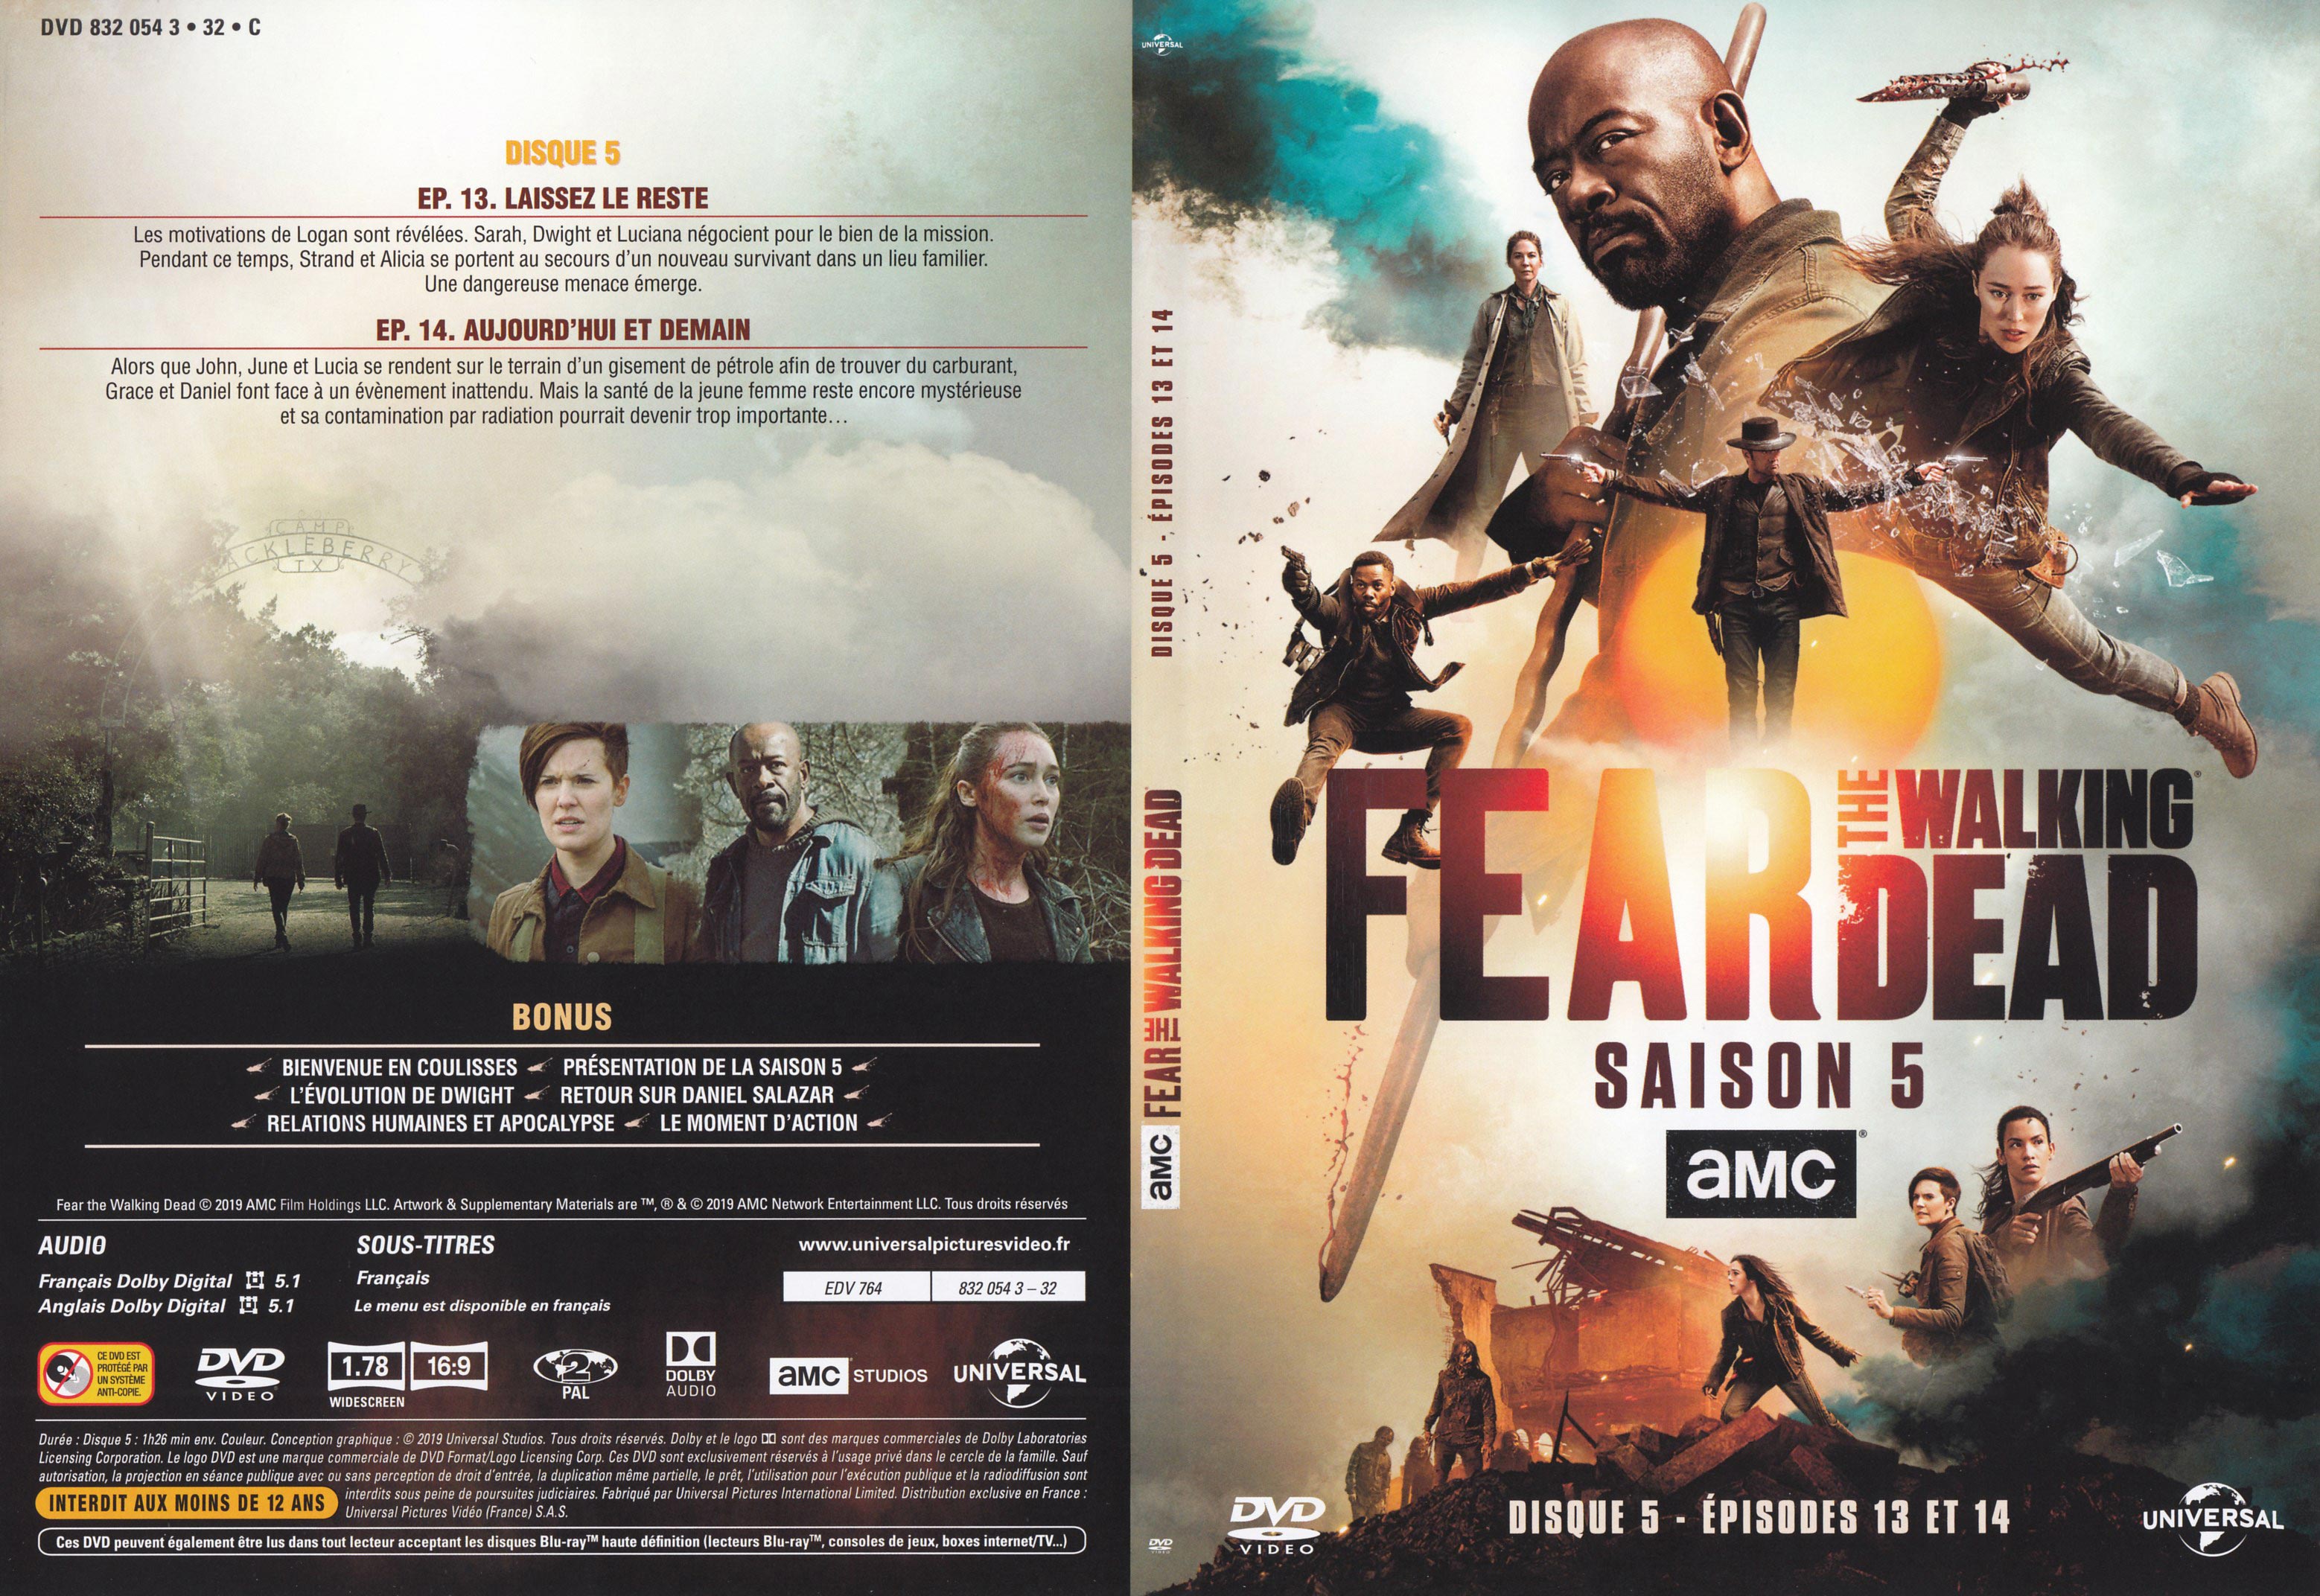 Jaquette DVD Fear the walking dead Saison 5 DVD 3